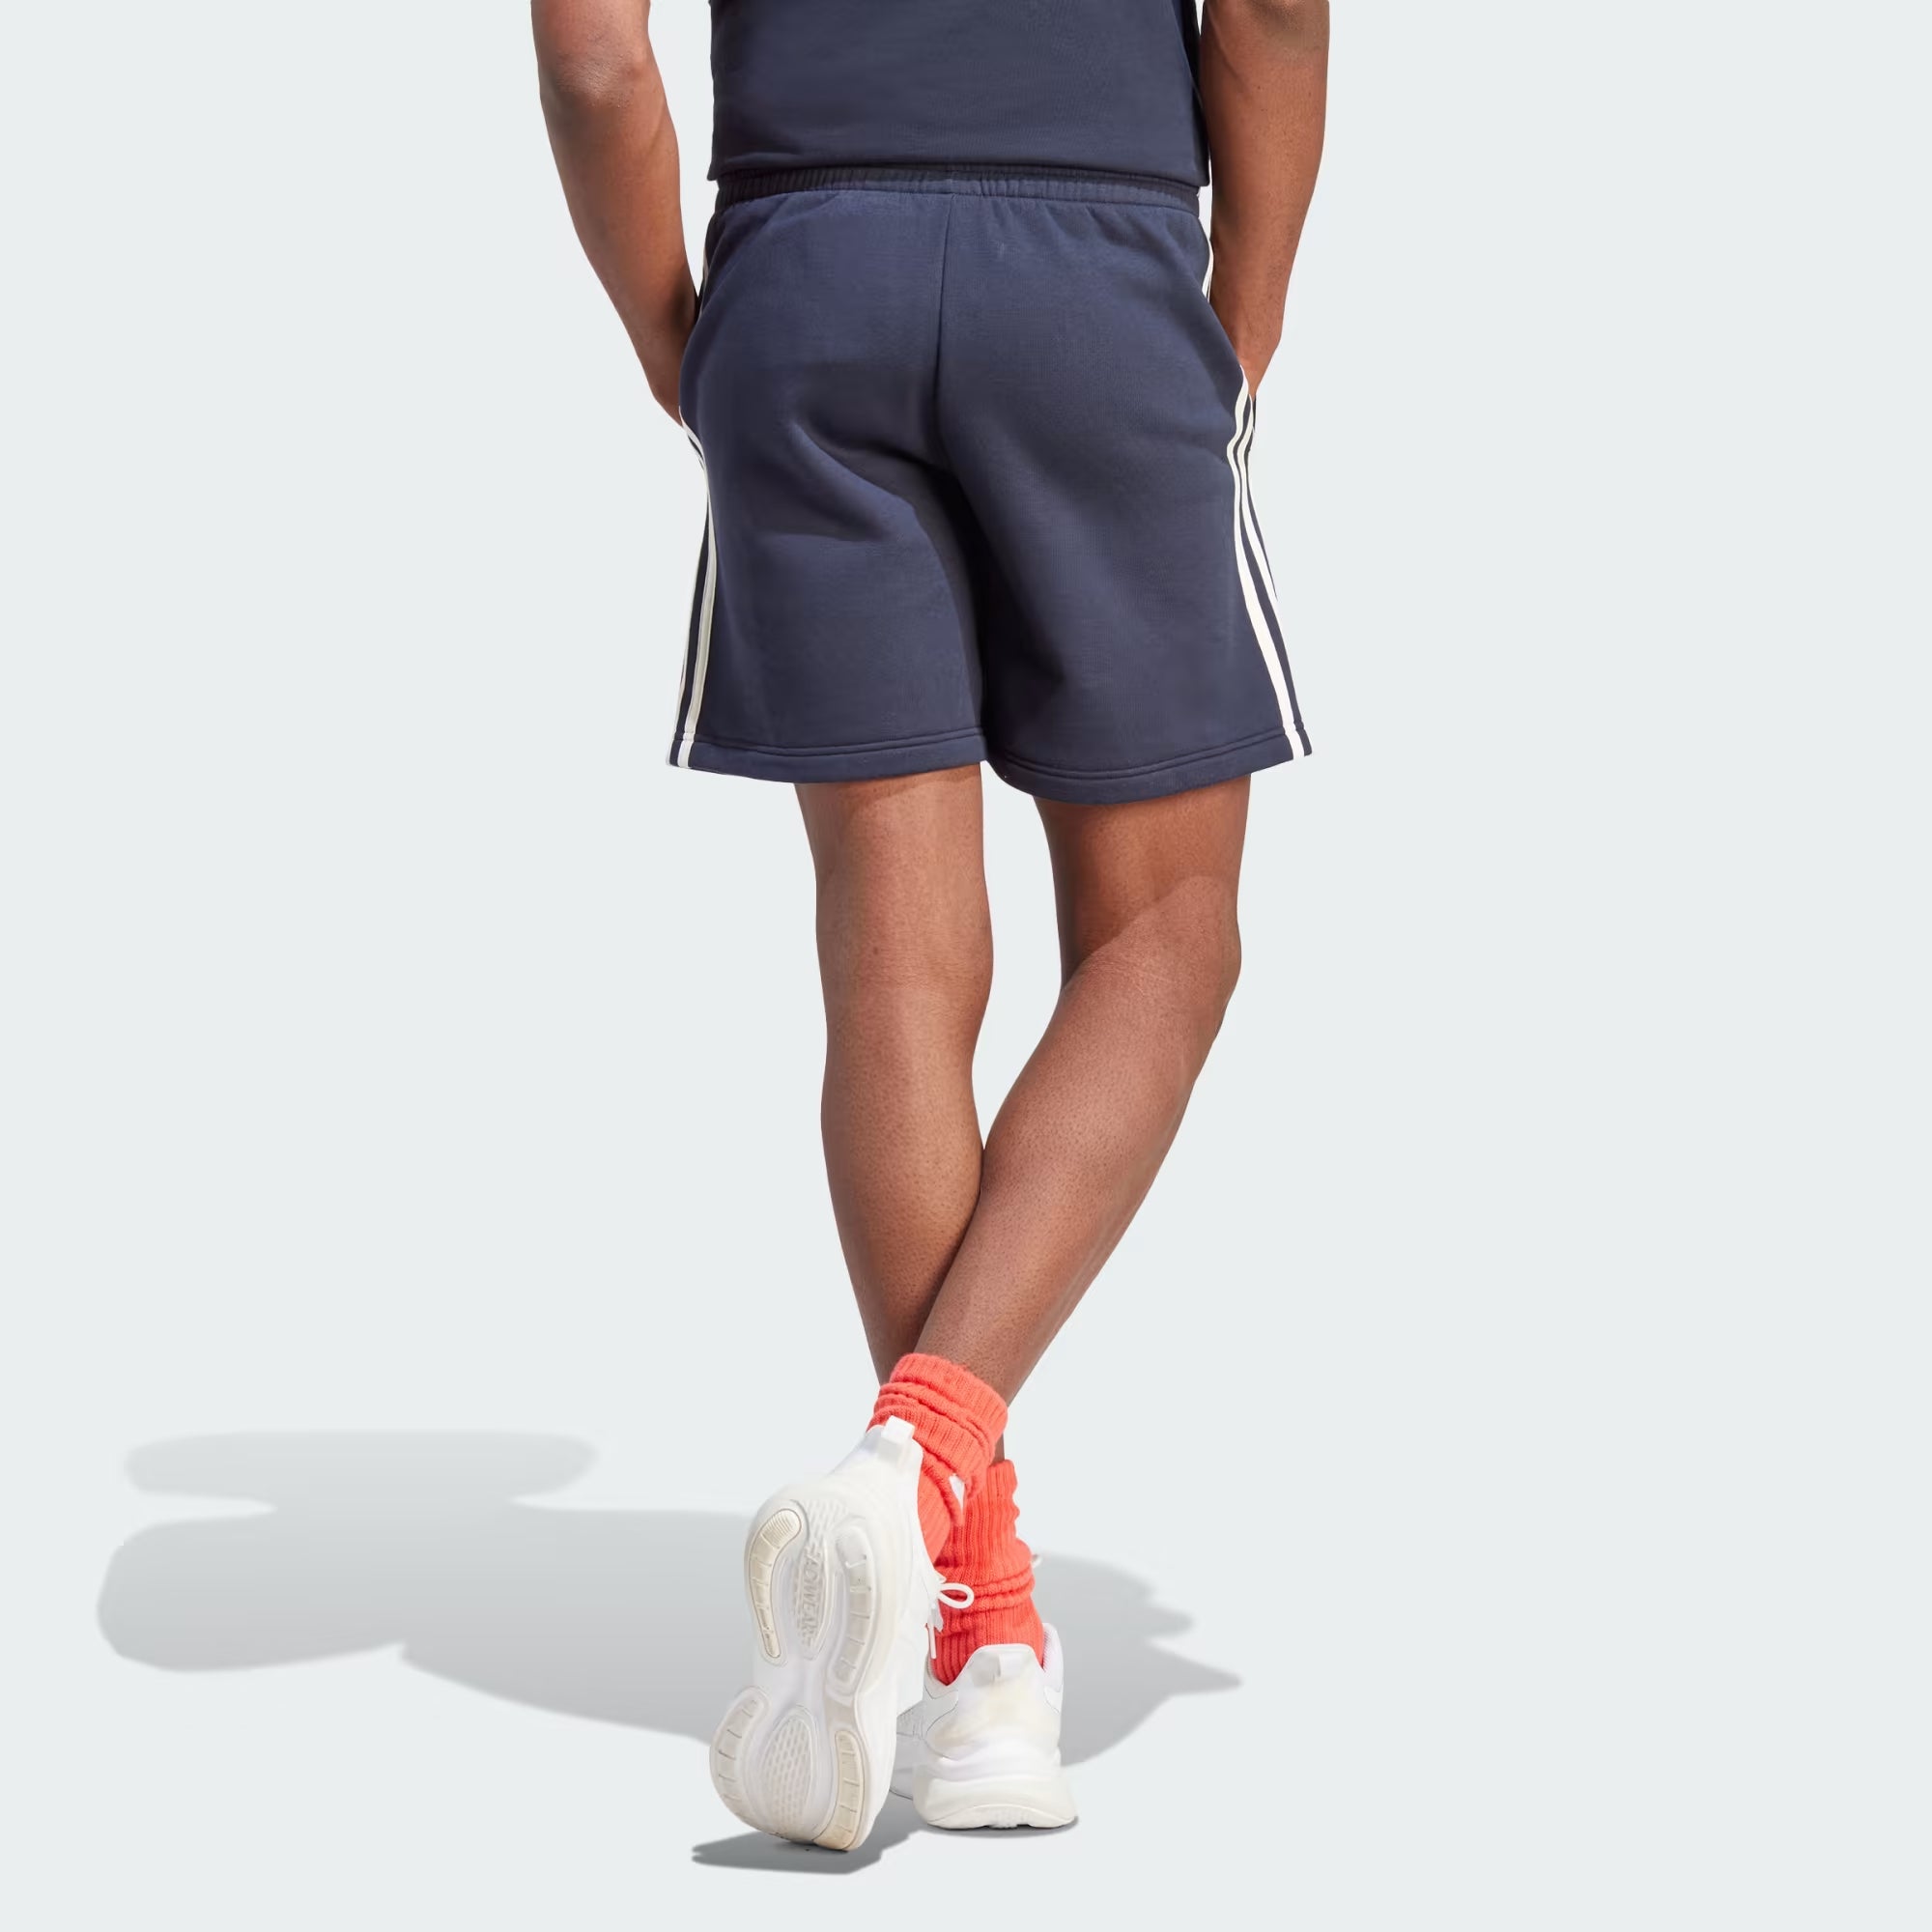 Adidas Colorblock Shorts - Men